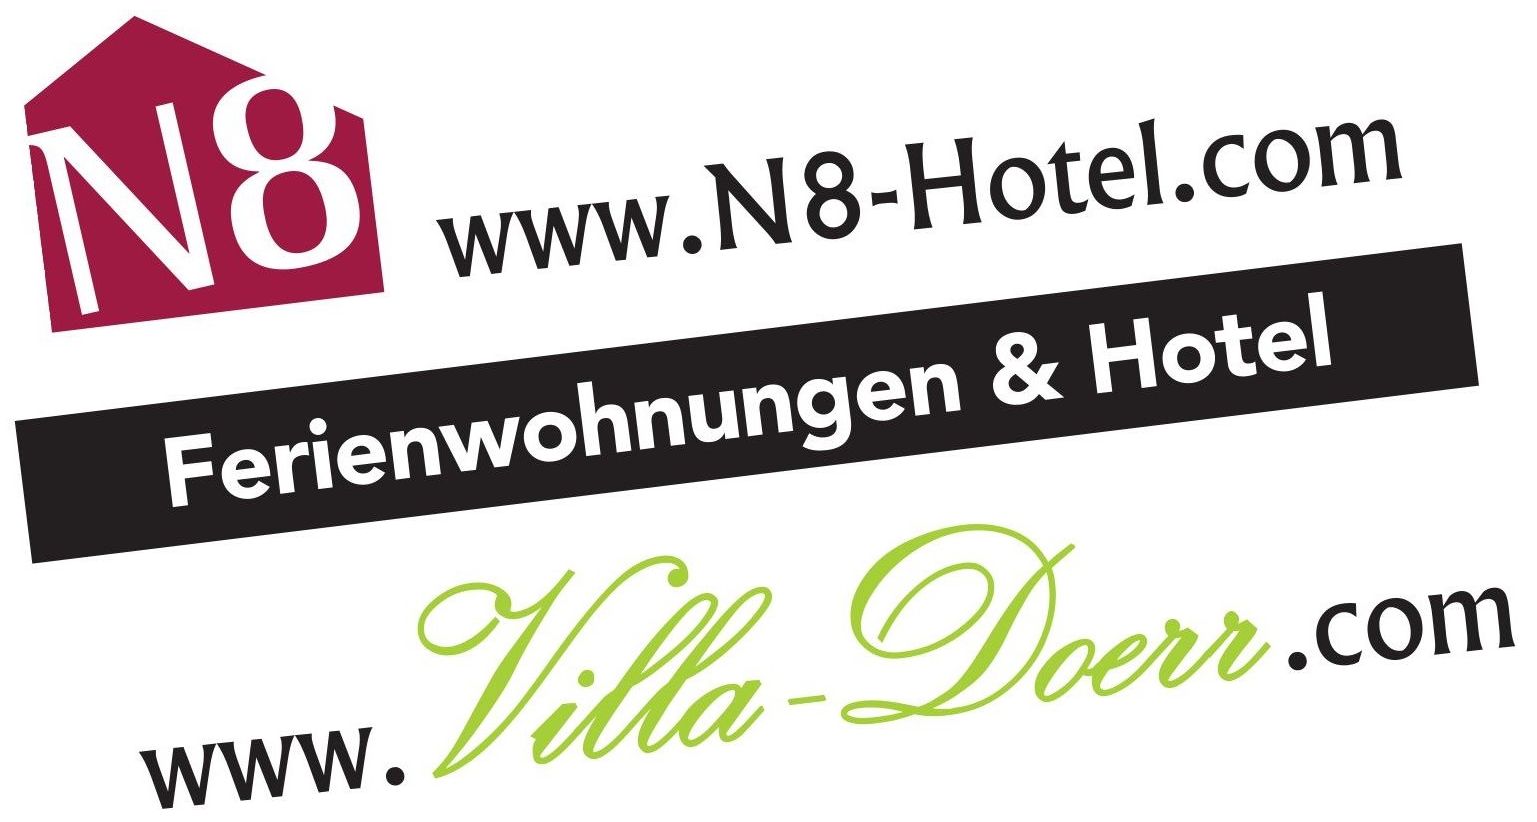 (c) N8-hotel.com